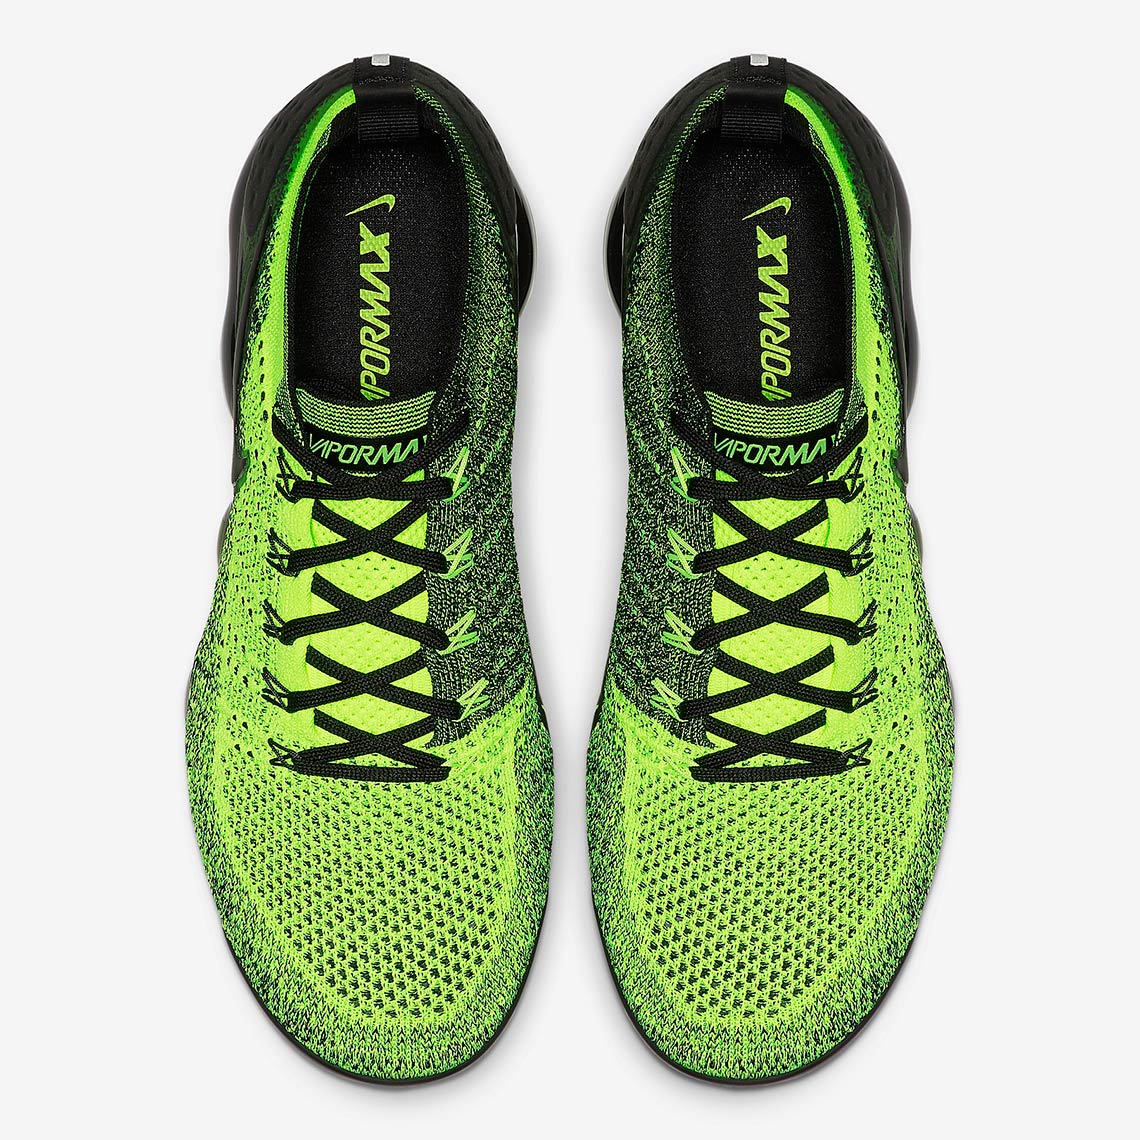 Nike Vapormax 2.0 Releasing In Neon Green And Black Colorway